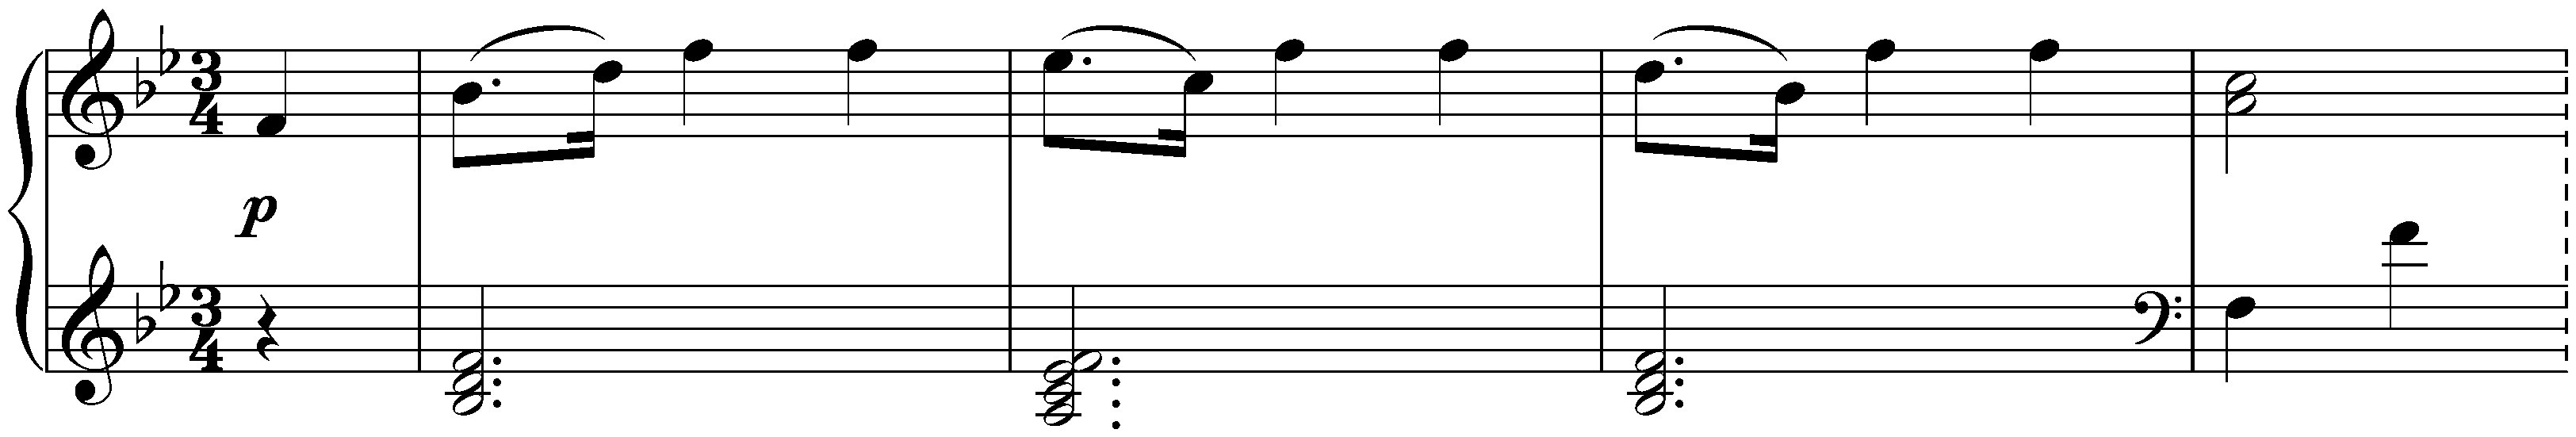 Twelve Minuets, WoO 7; 2. B-flat major